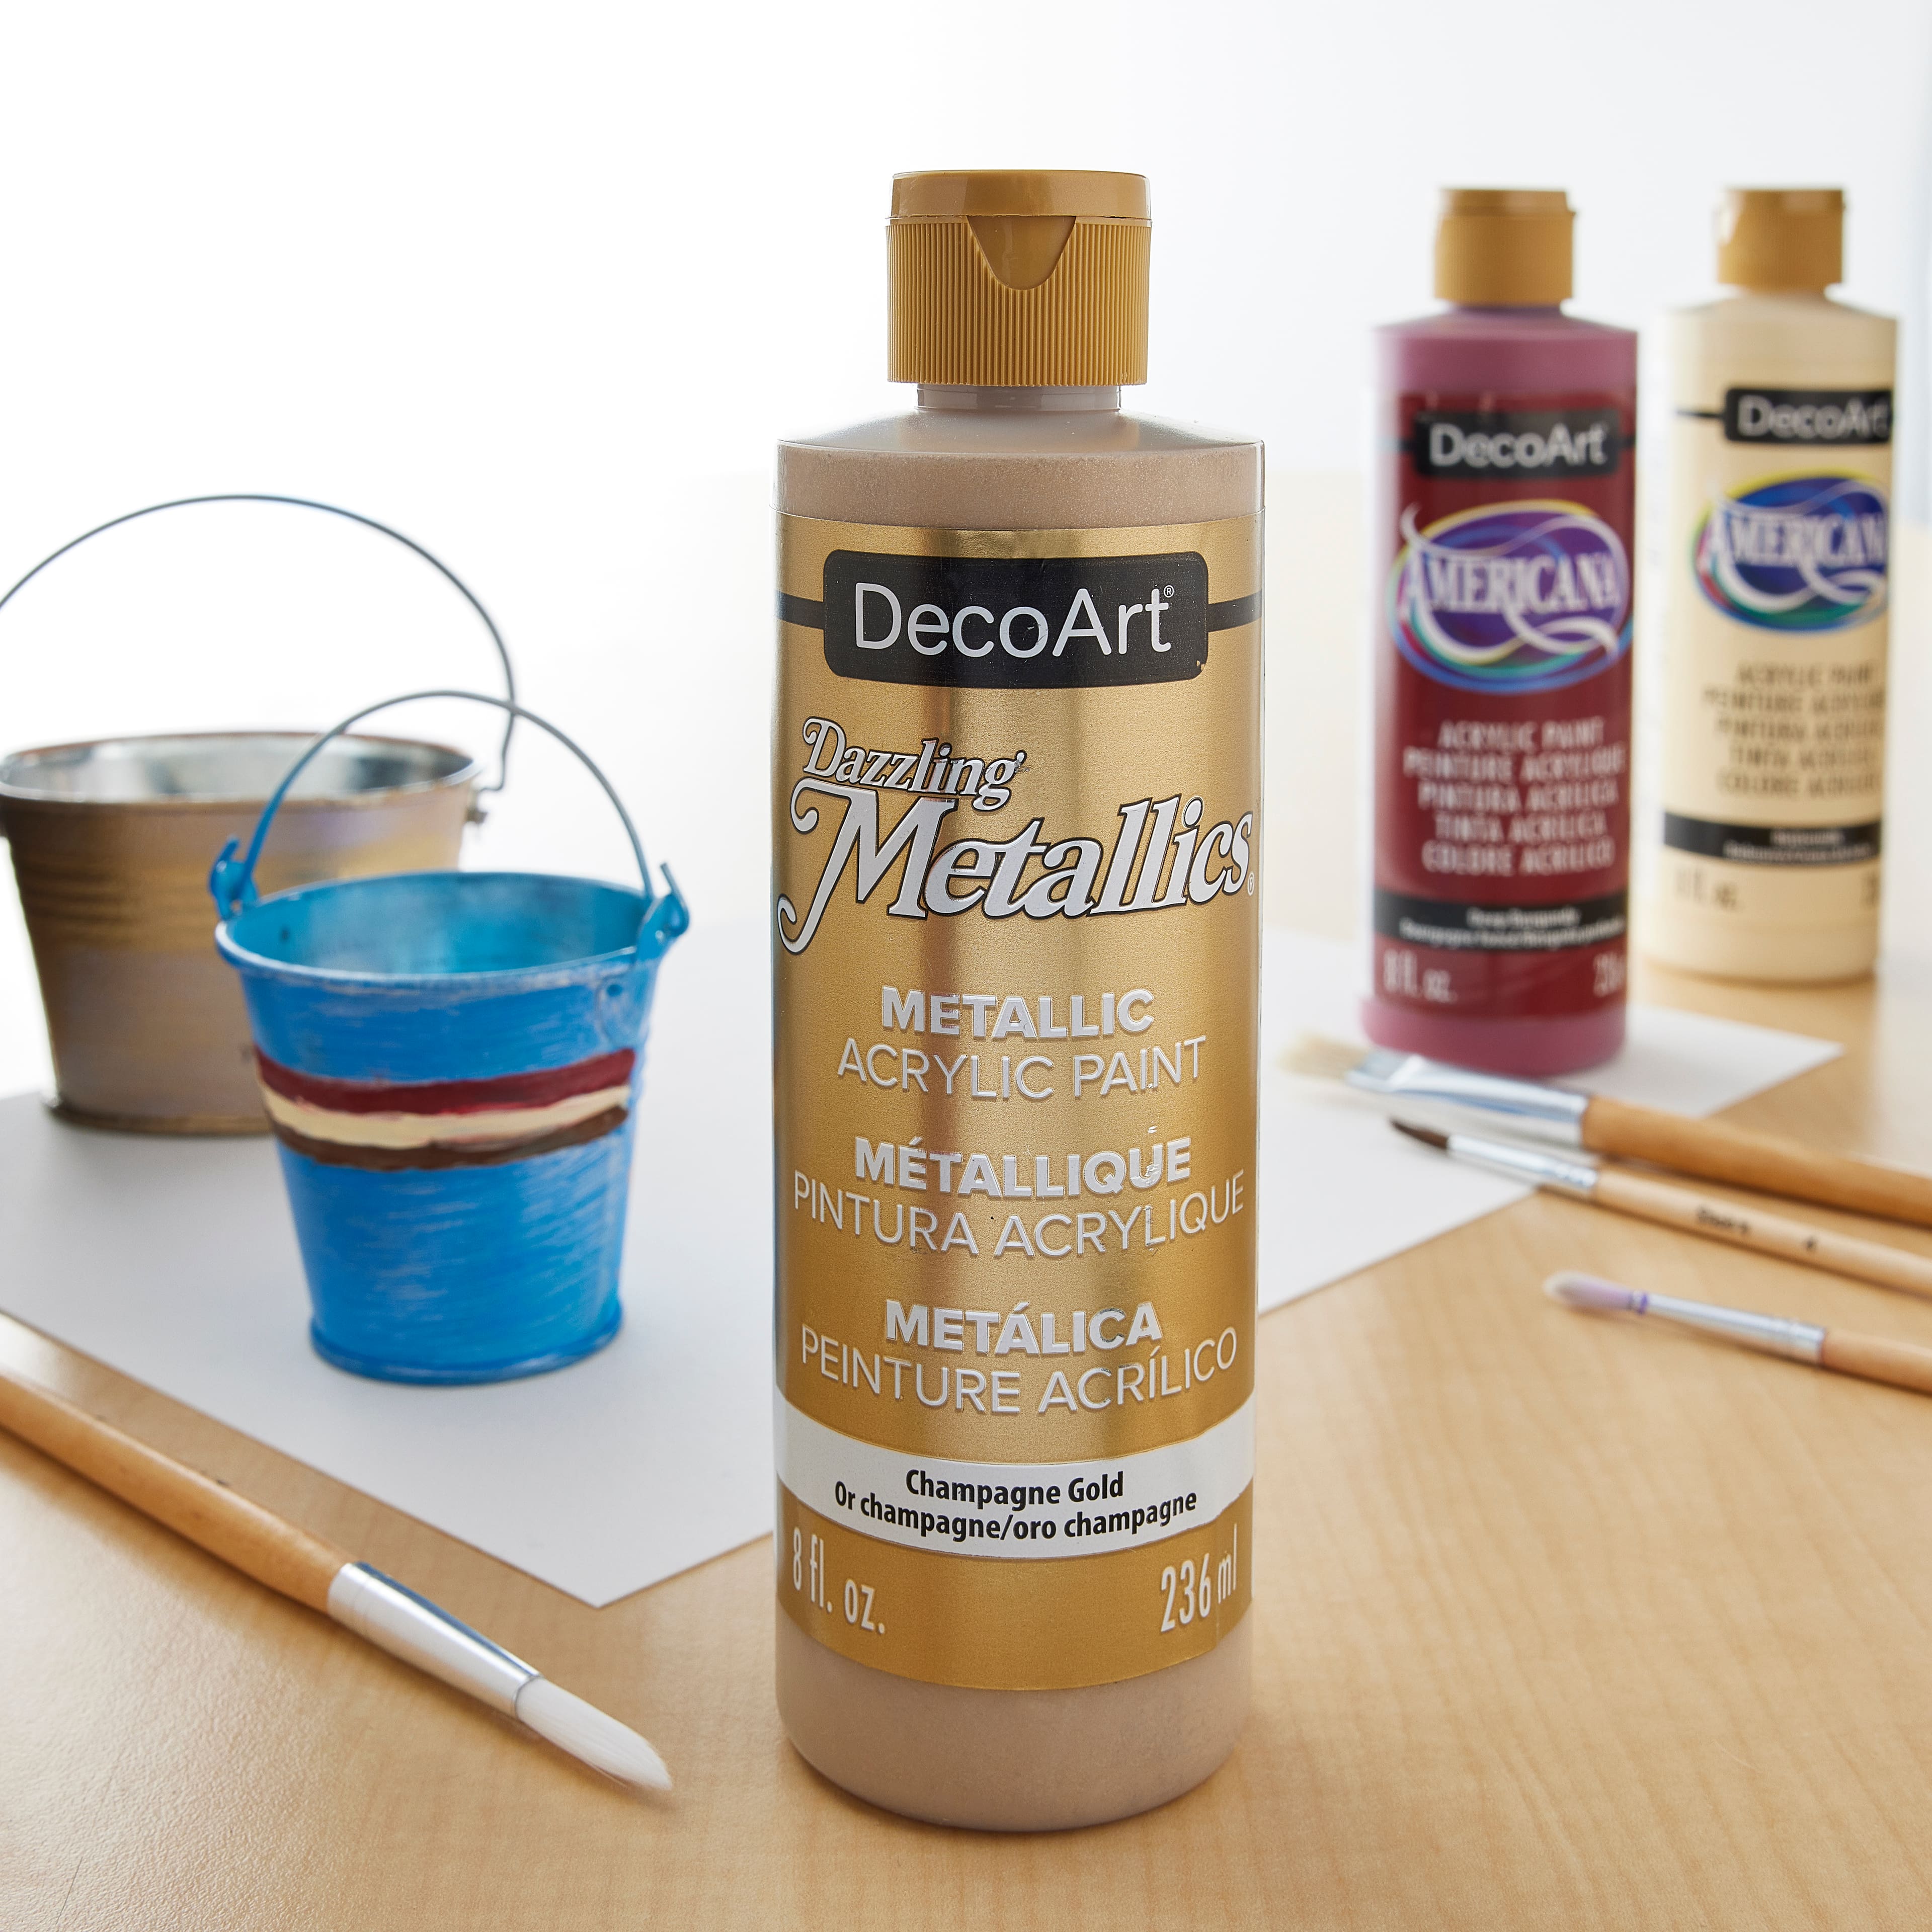 Dazzling Metallics - DecoArt Acrylic Paint and Art Supplies